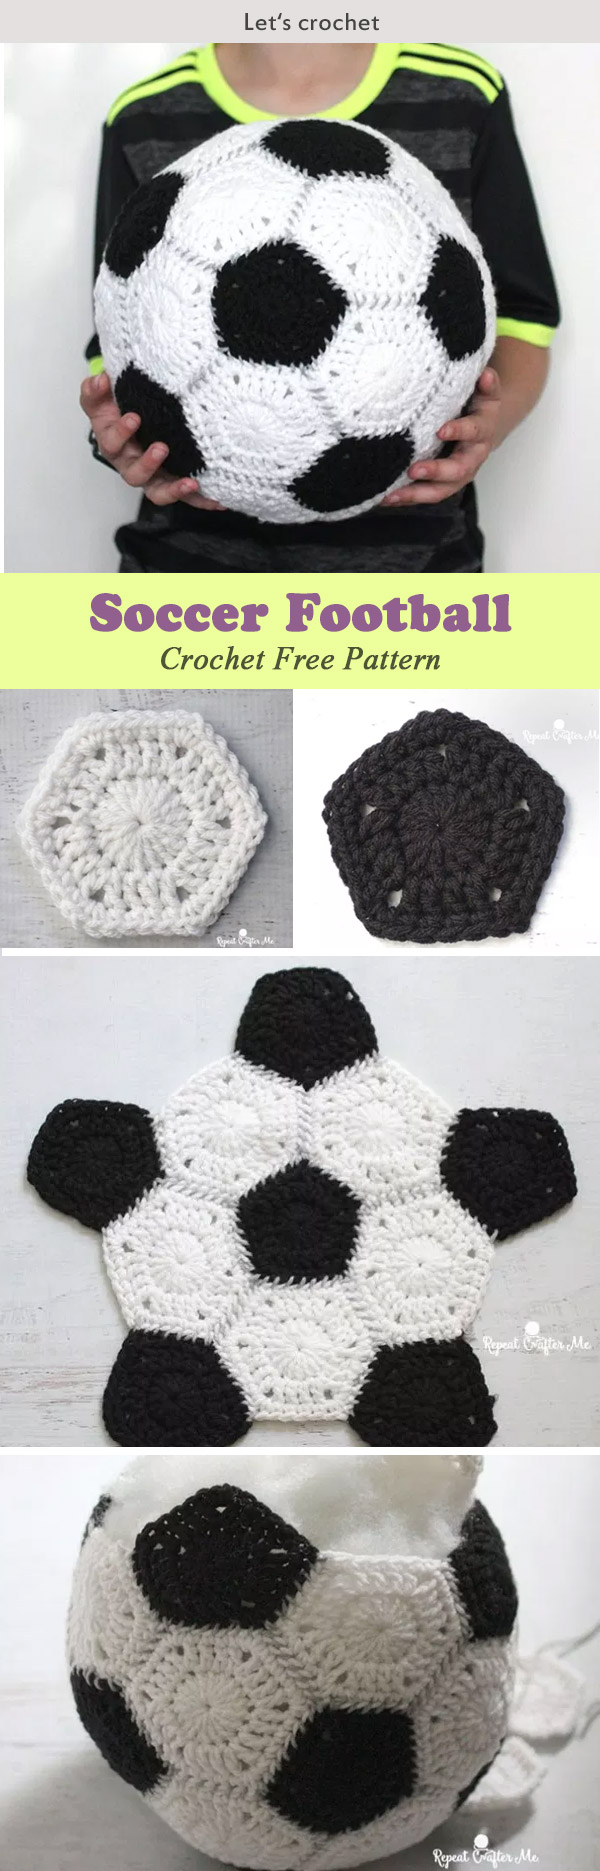 Crochet Soccer Football Free Pattern 